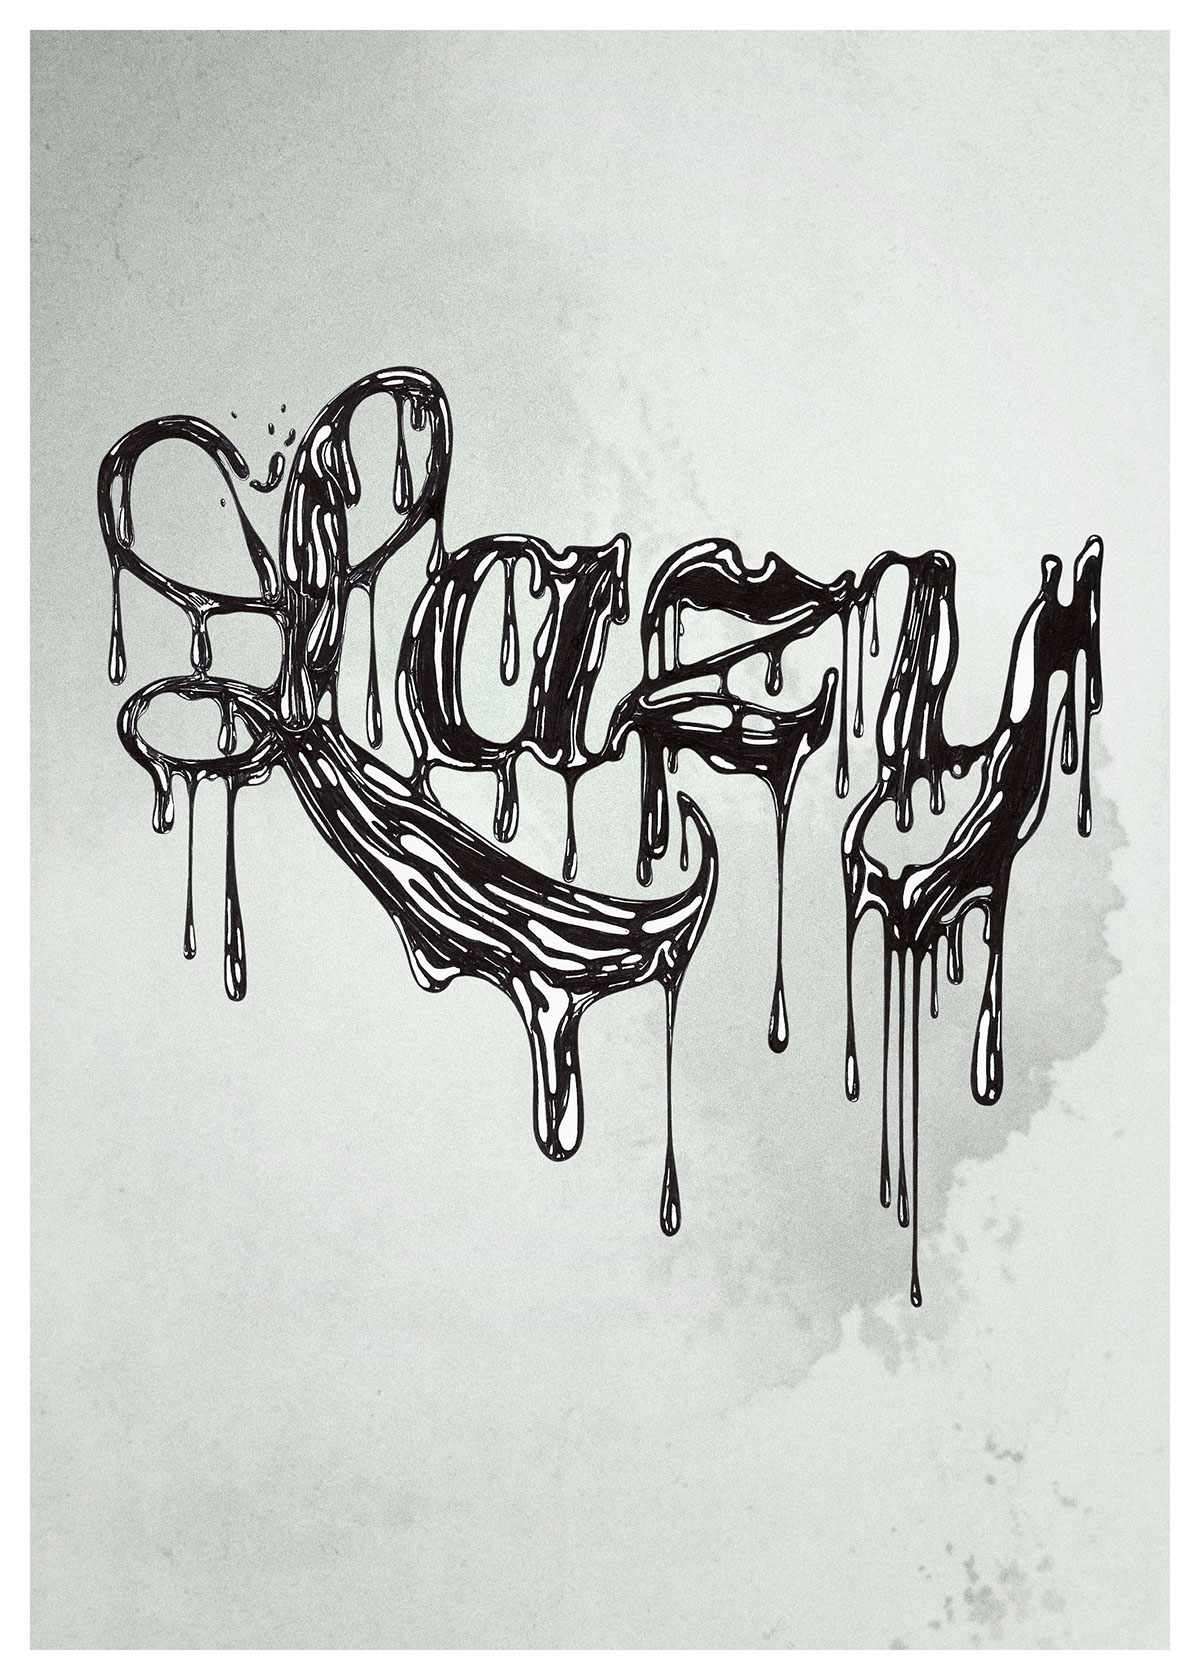 hand drawn fonts bossco fan script vito sans font photoshop cs3 warsaw grunge DISTORTED fluii Liquid